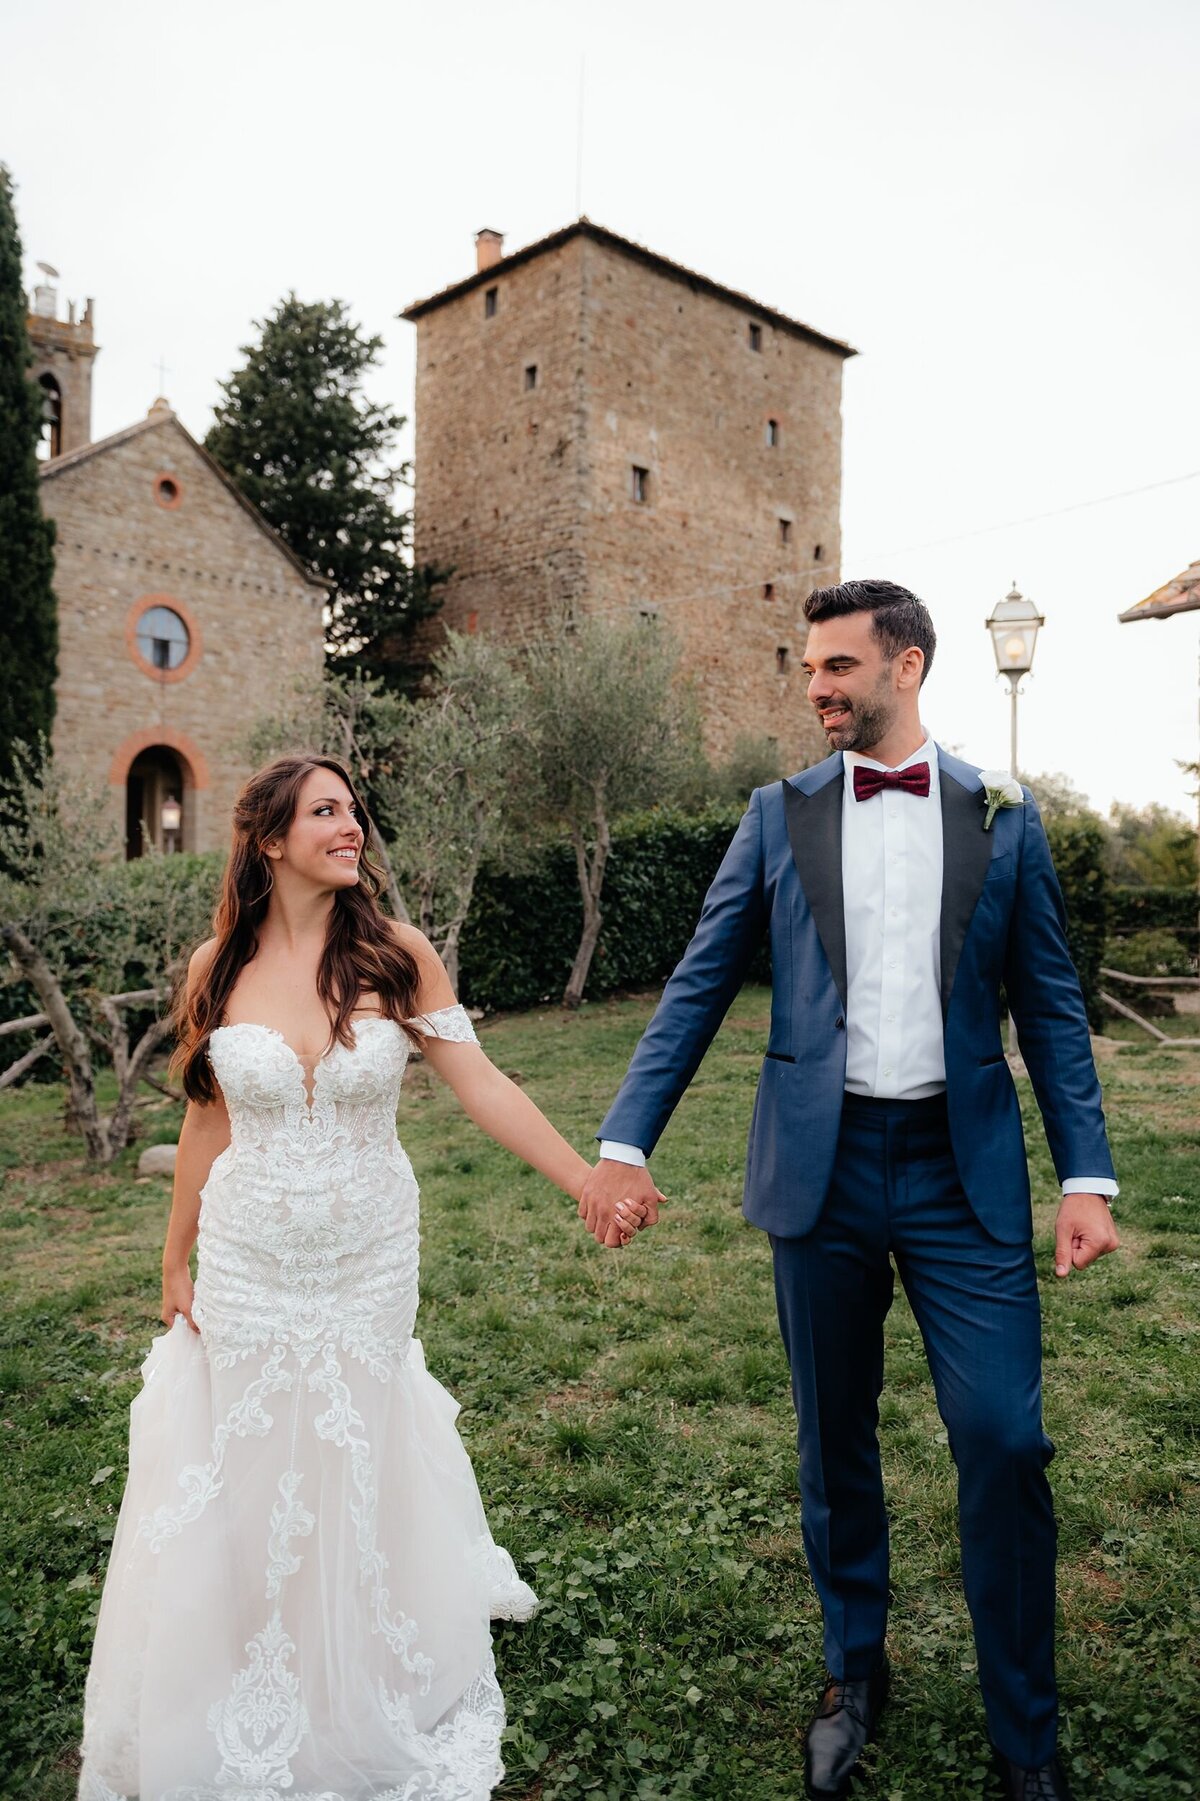 Pete-and-Brenna-Tuscany-Italy-Destination-Wedding-84